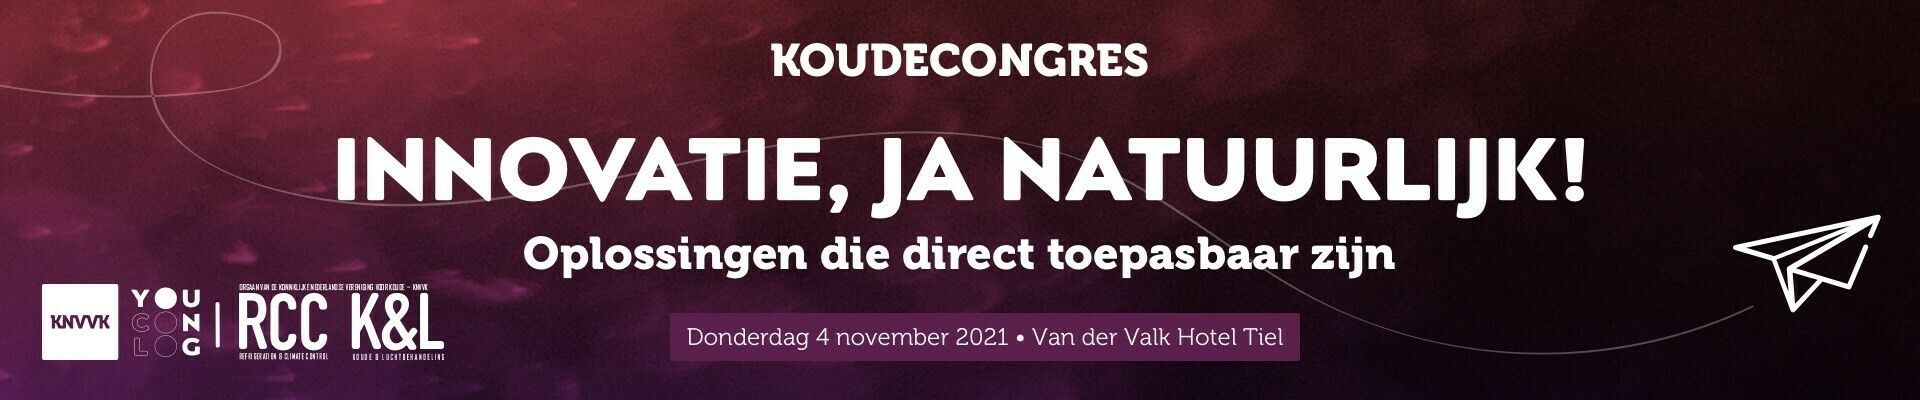 RCC Koudecongres - Knvvk 2021